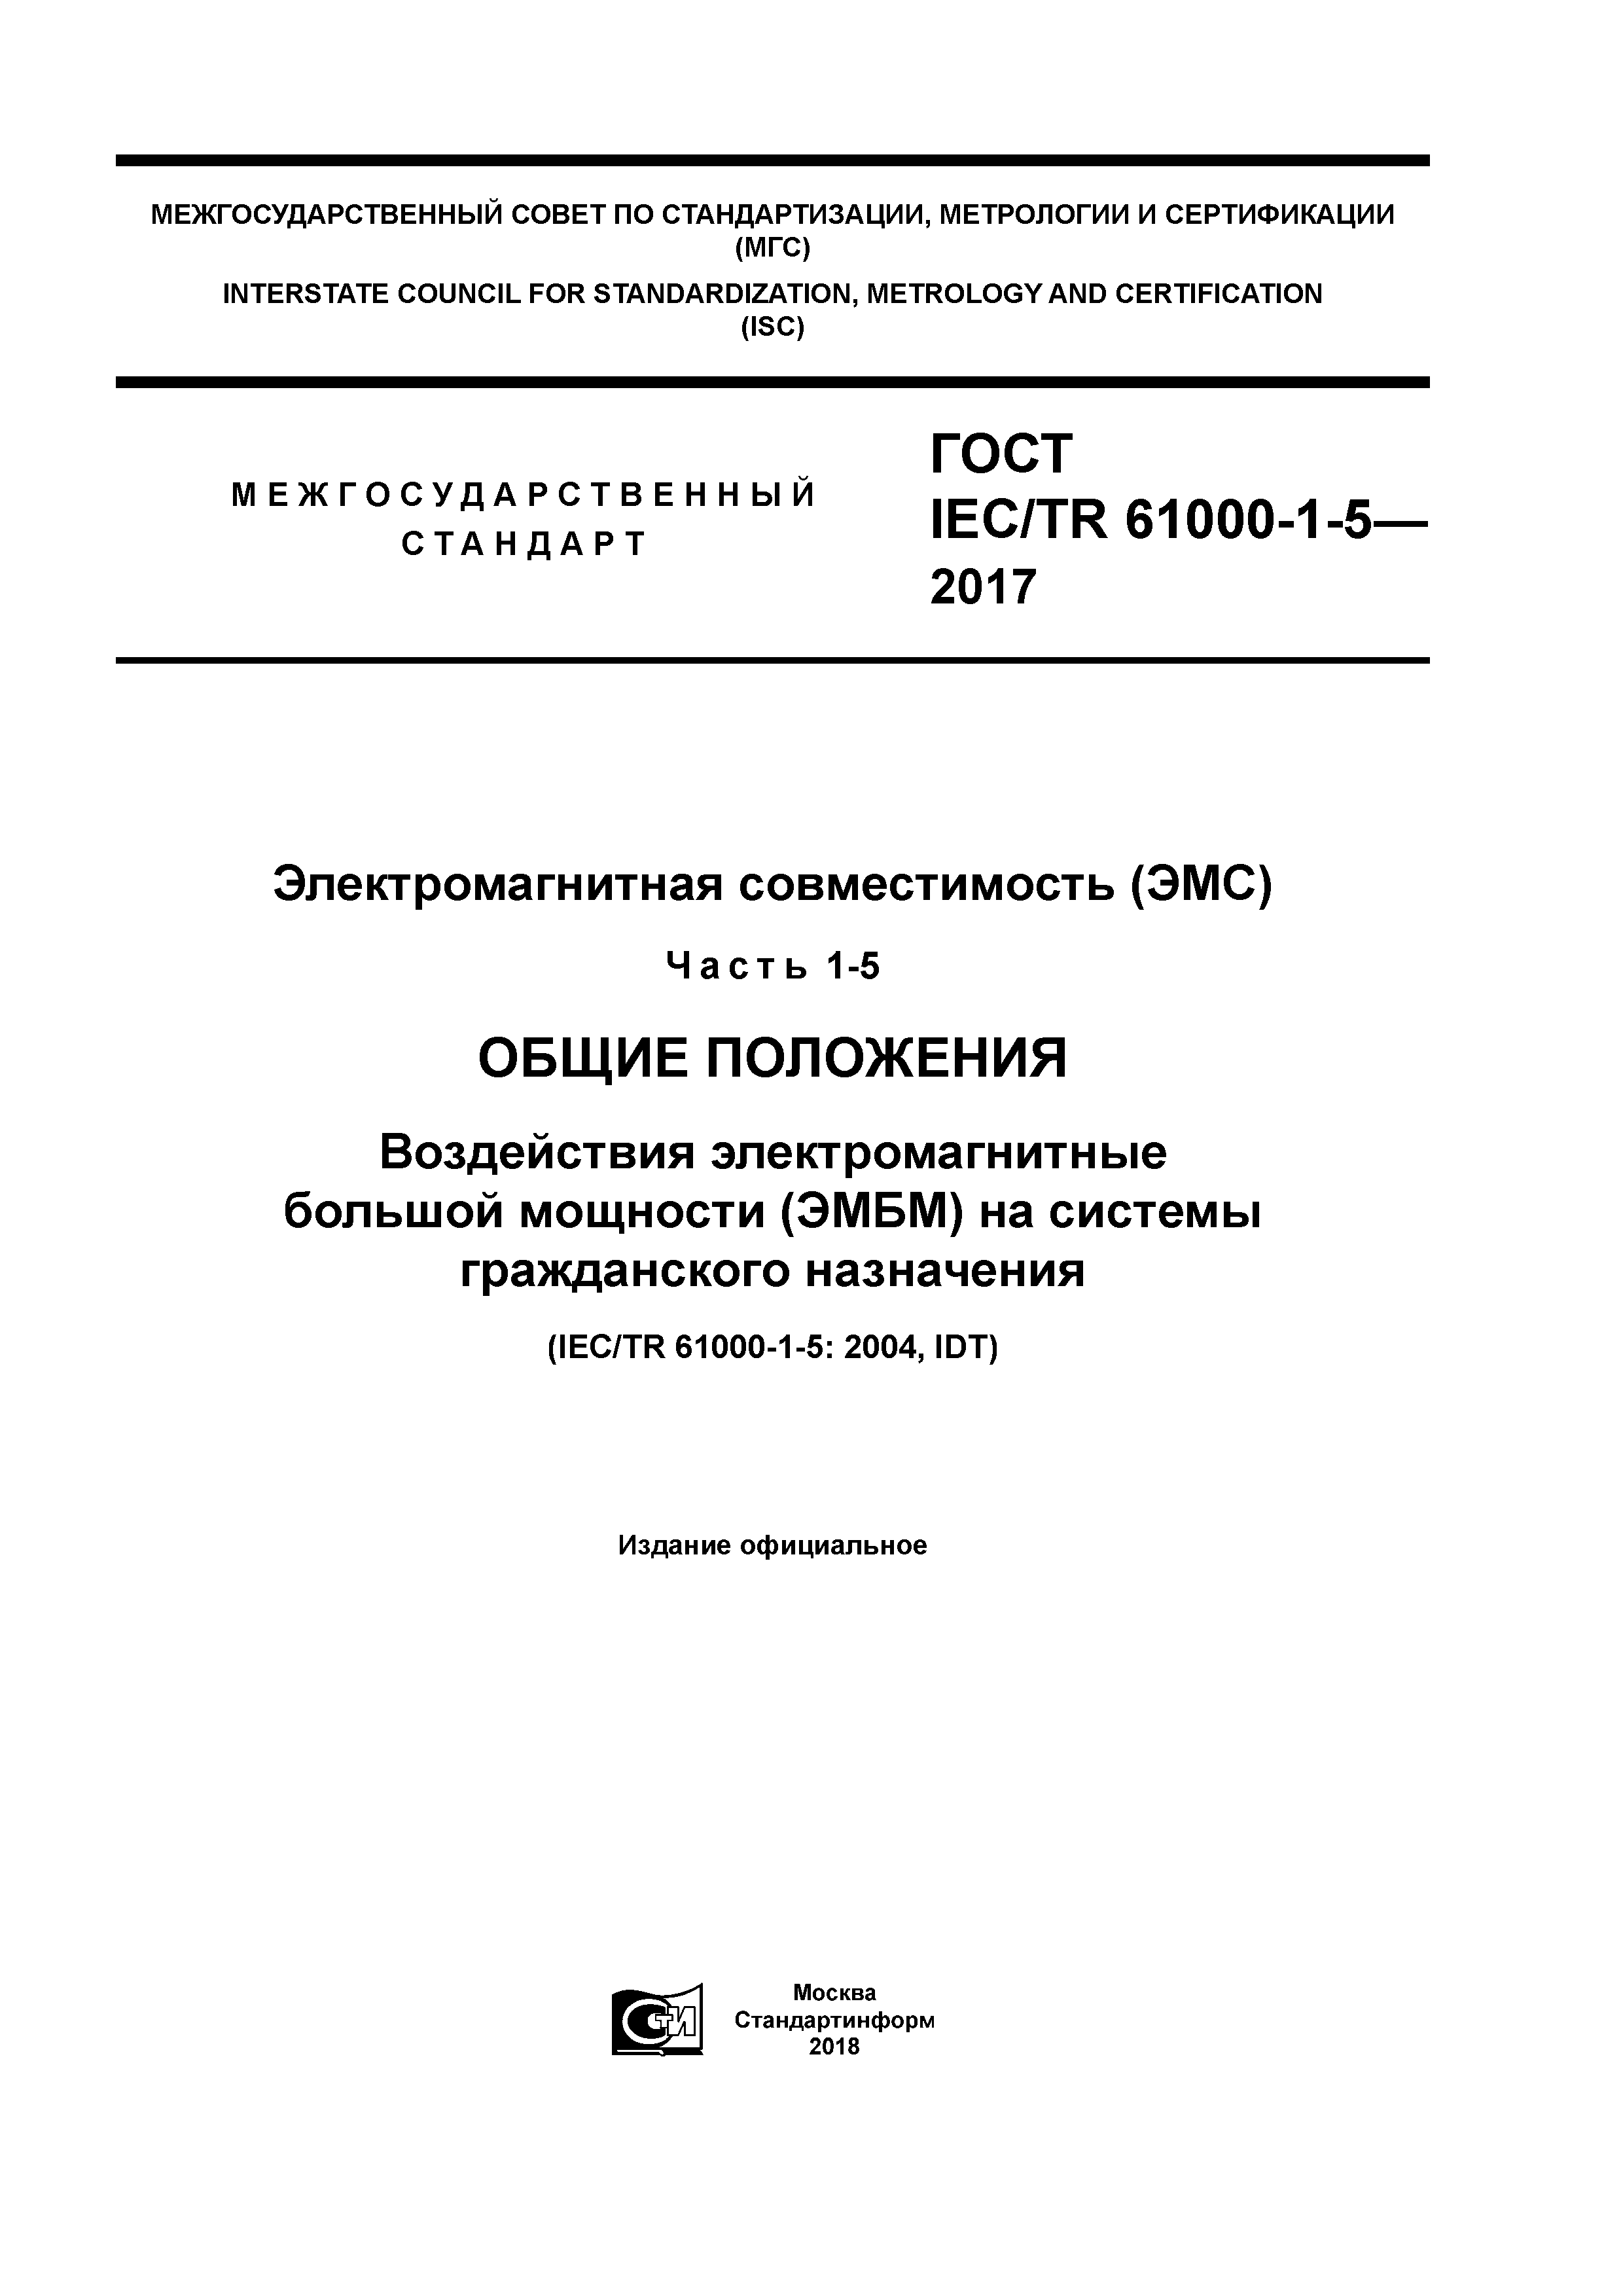 ГОСТ IEC/TR 61000-1-5-2017